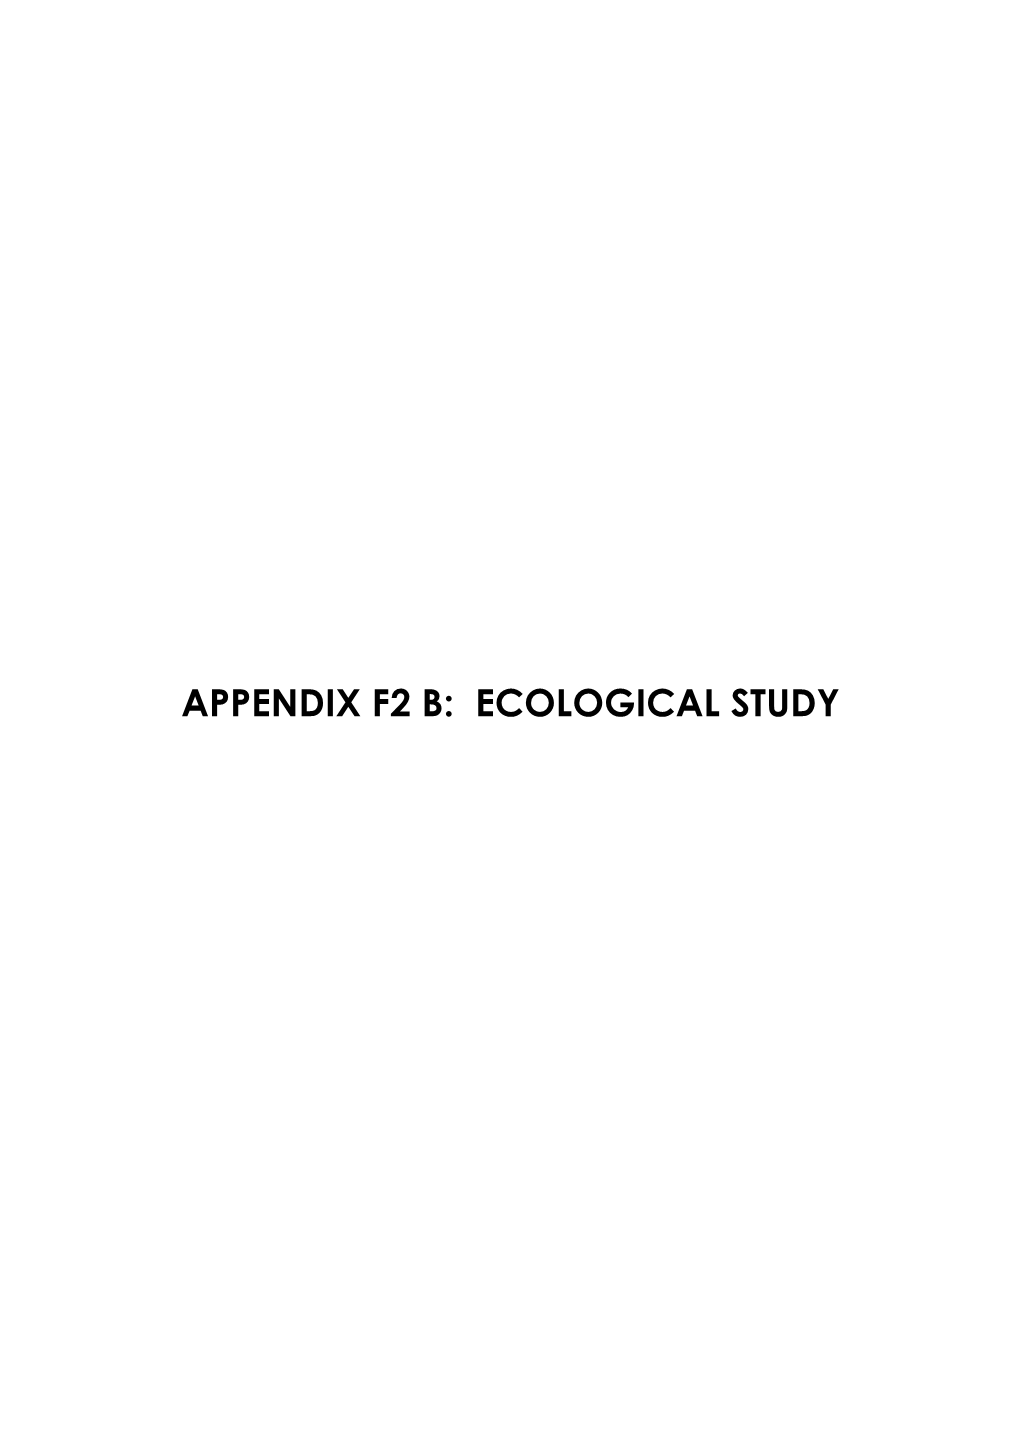 Ecological Study